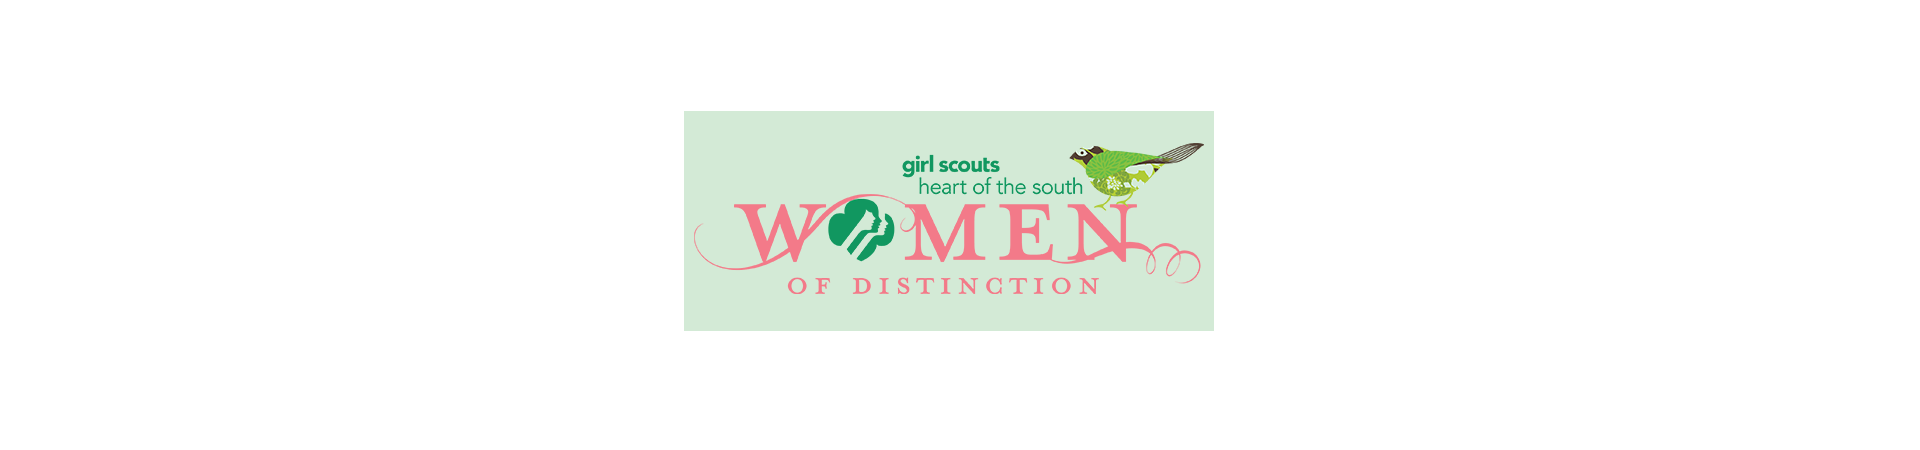  women of distinction logo 